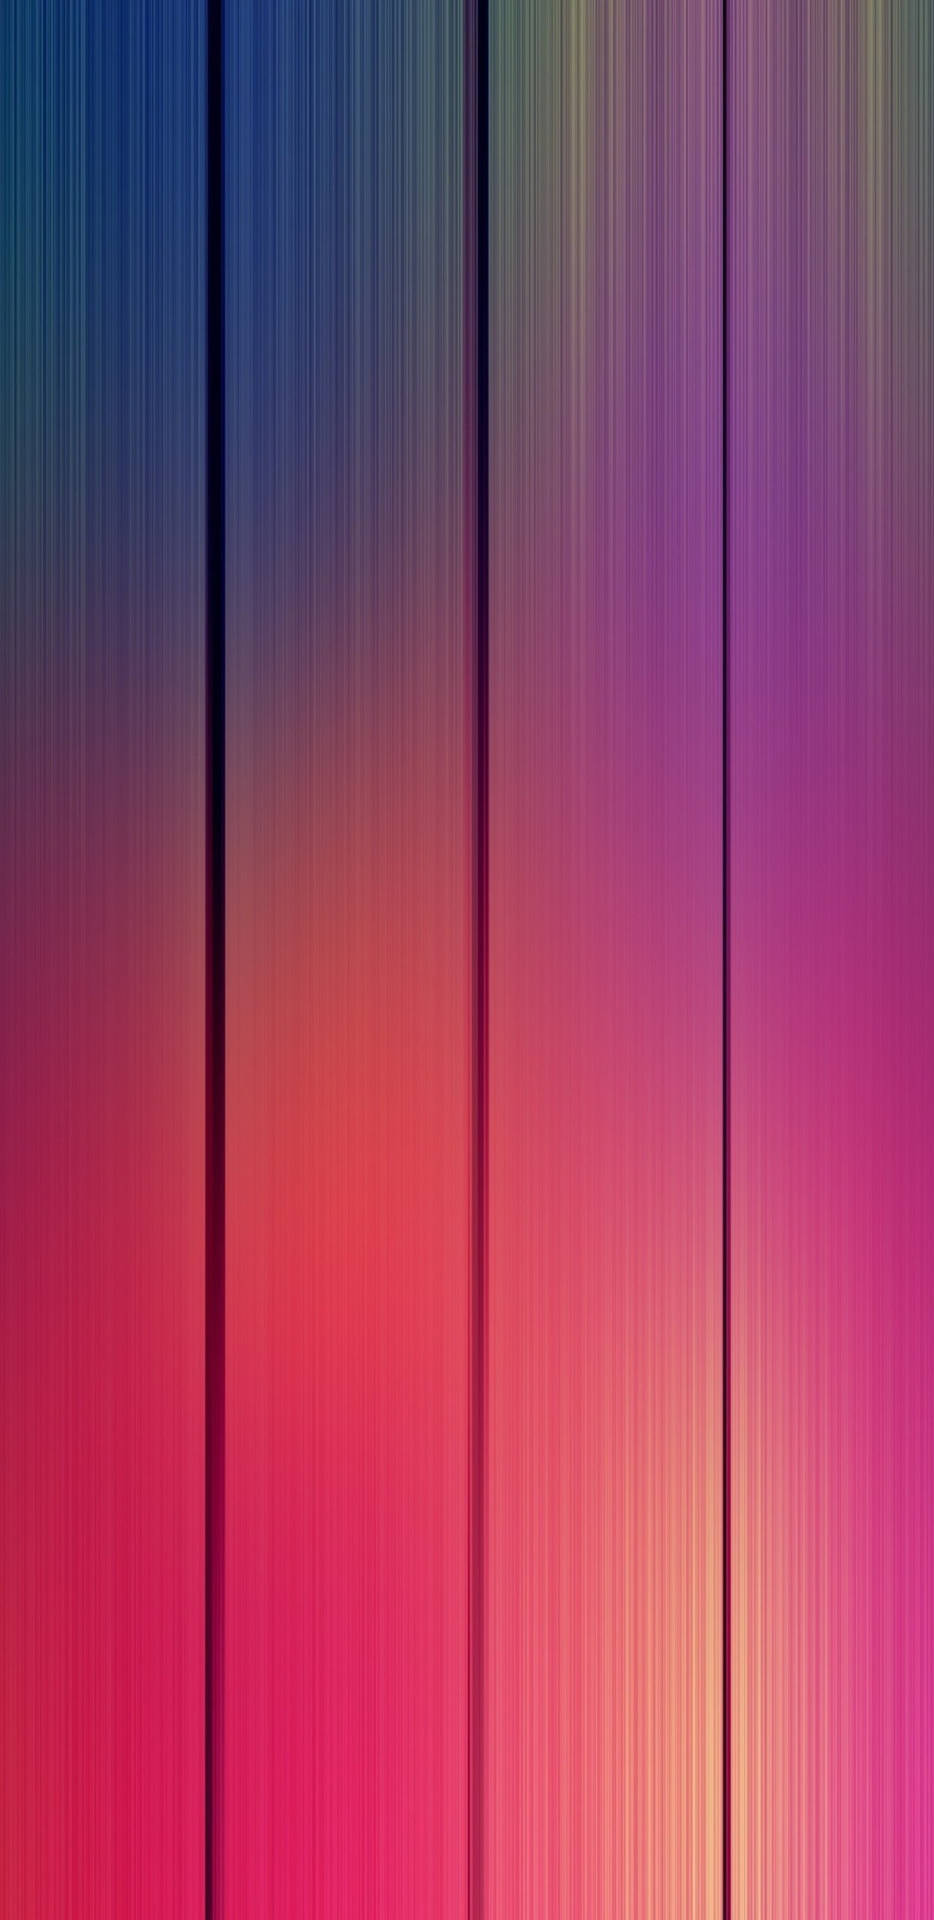 Pixel 3 Xl Colorful Wood Panels